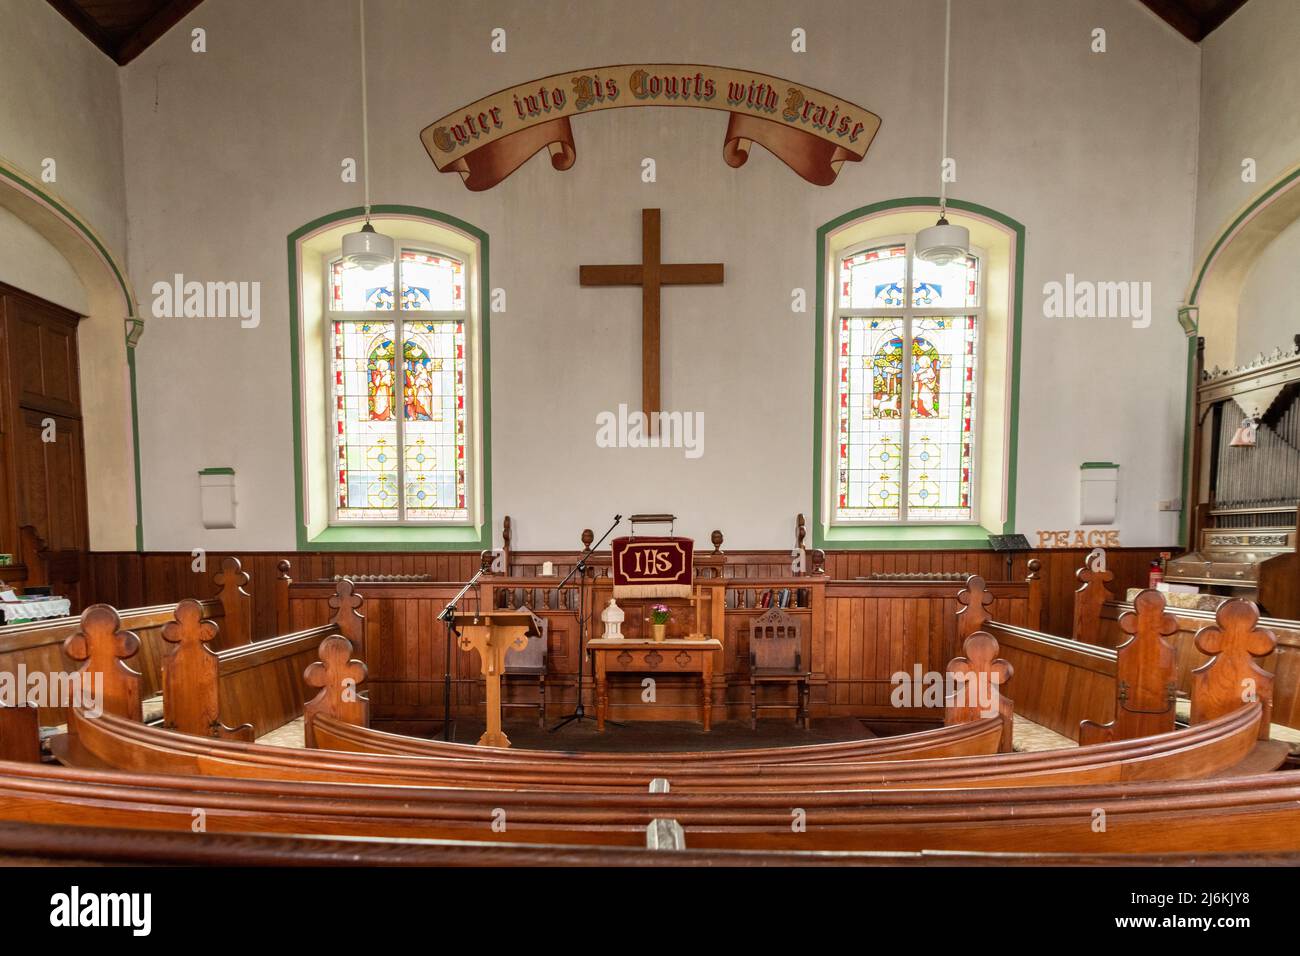 Interior de la Iglesia Metodista West Burton, North Yorkshire, Inglaterra, Reino Unido Foto de stock